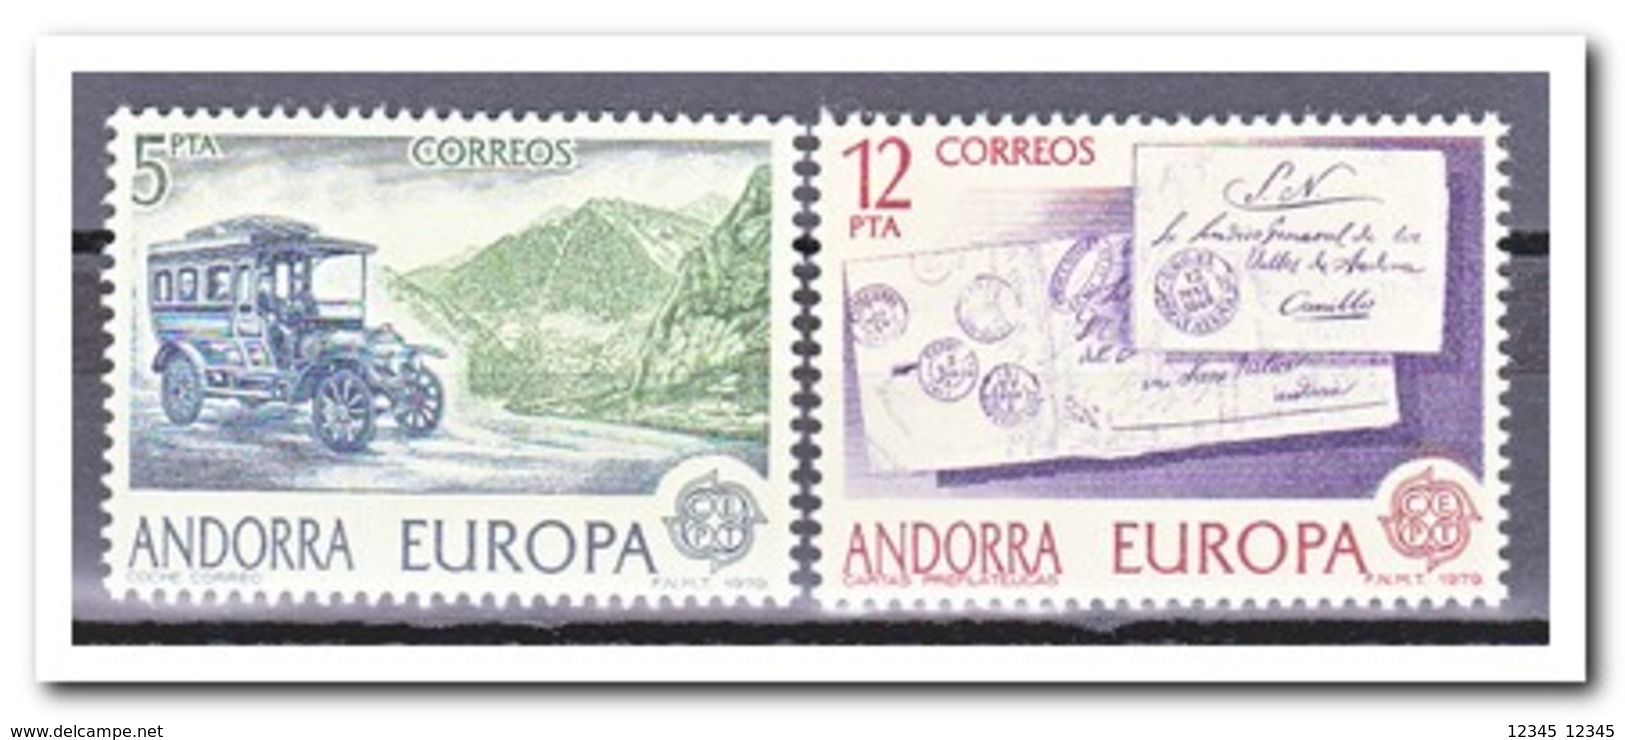 Spaans Andorra 1979, Postfris MNH, Europe, Post - Unused Stamps